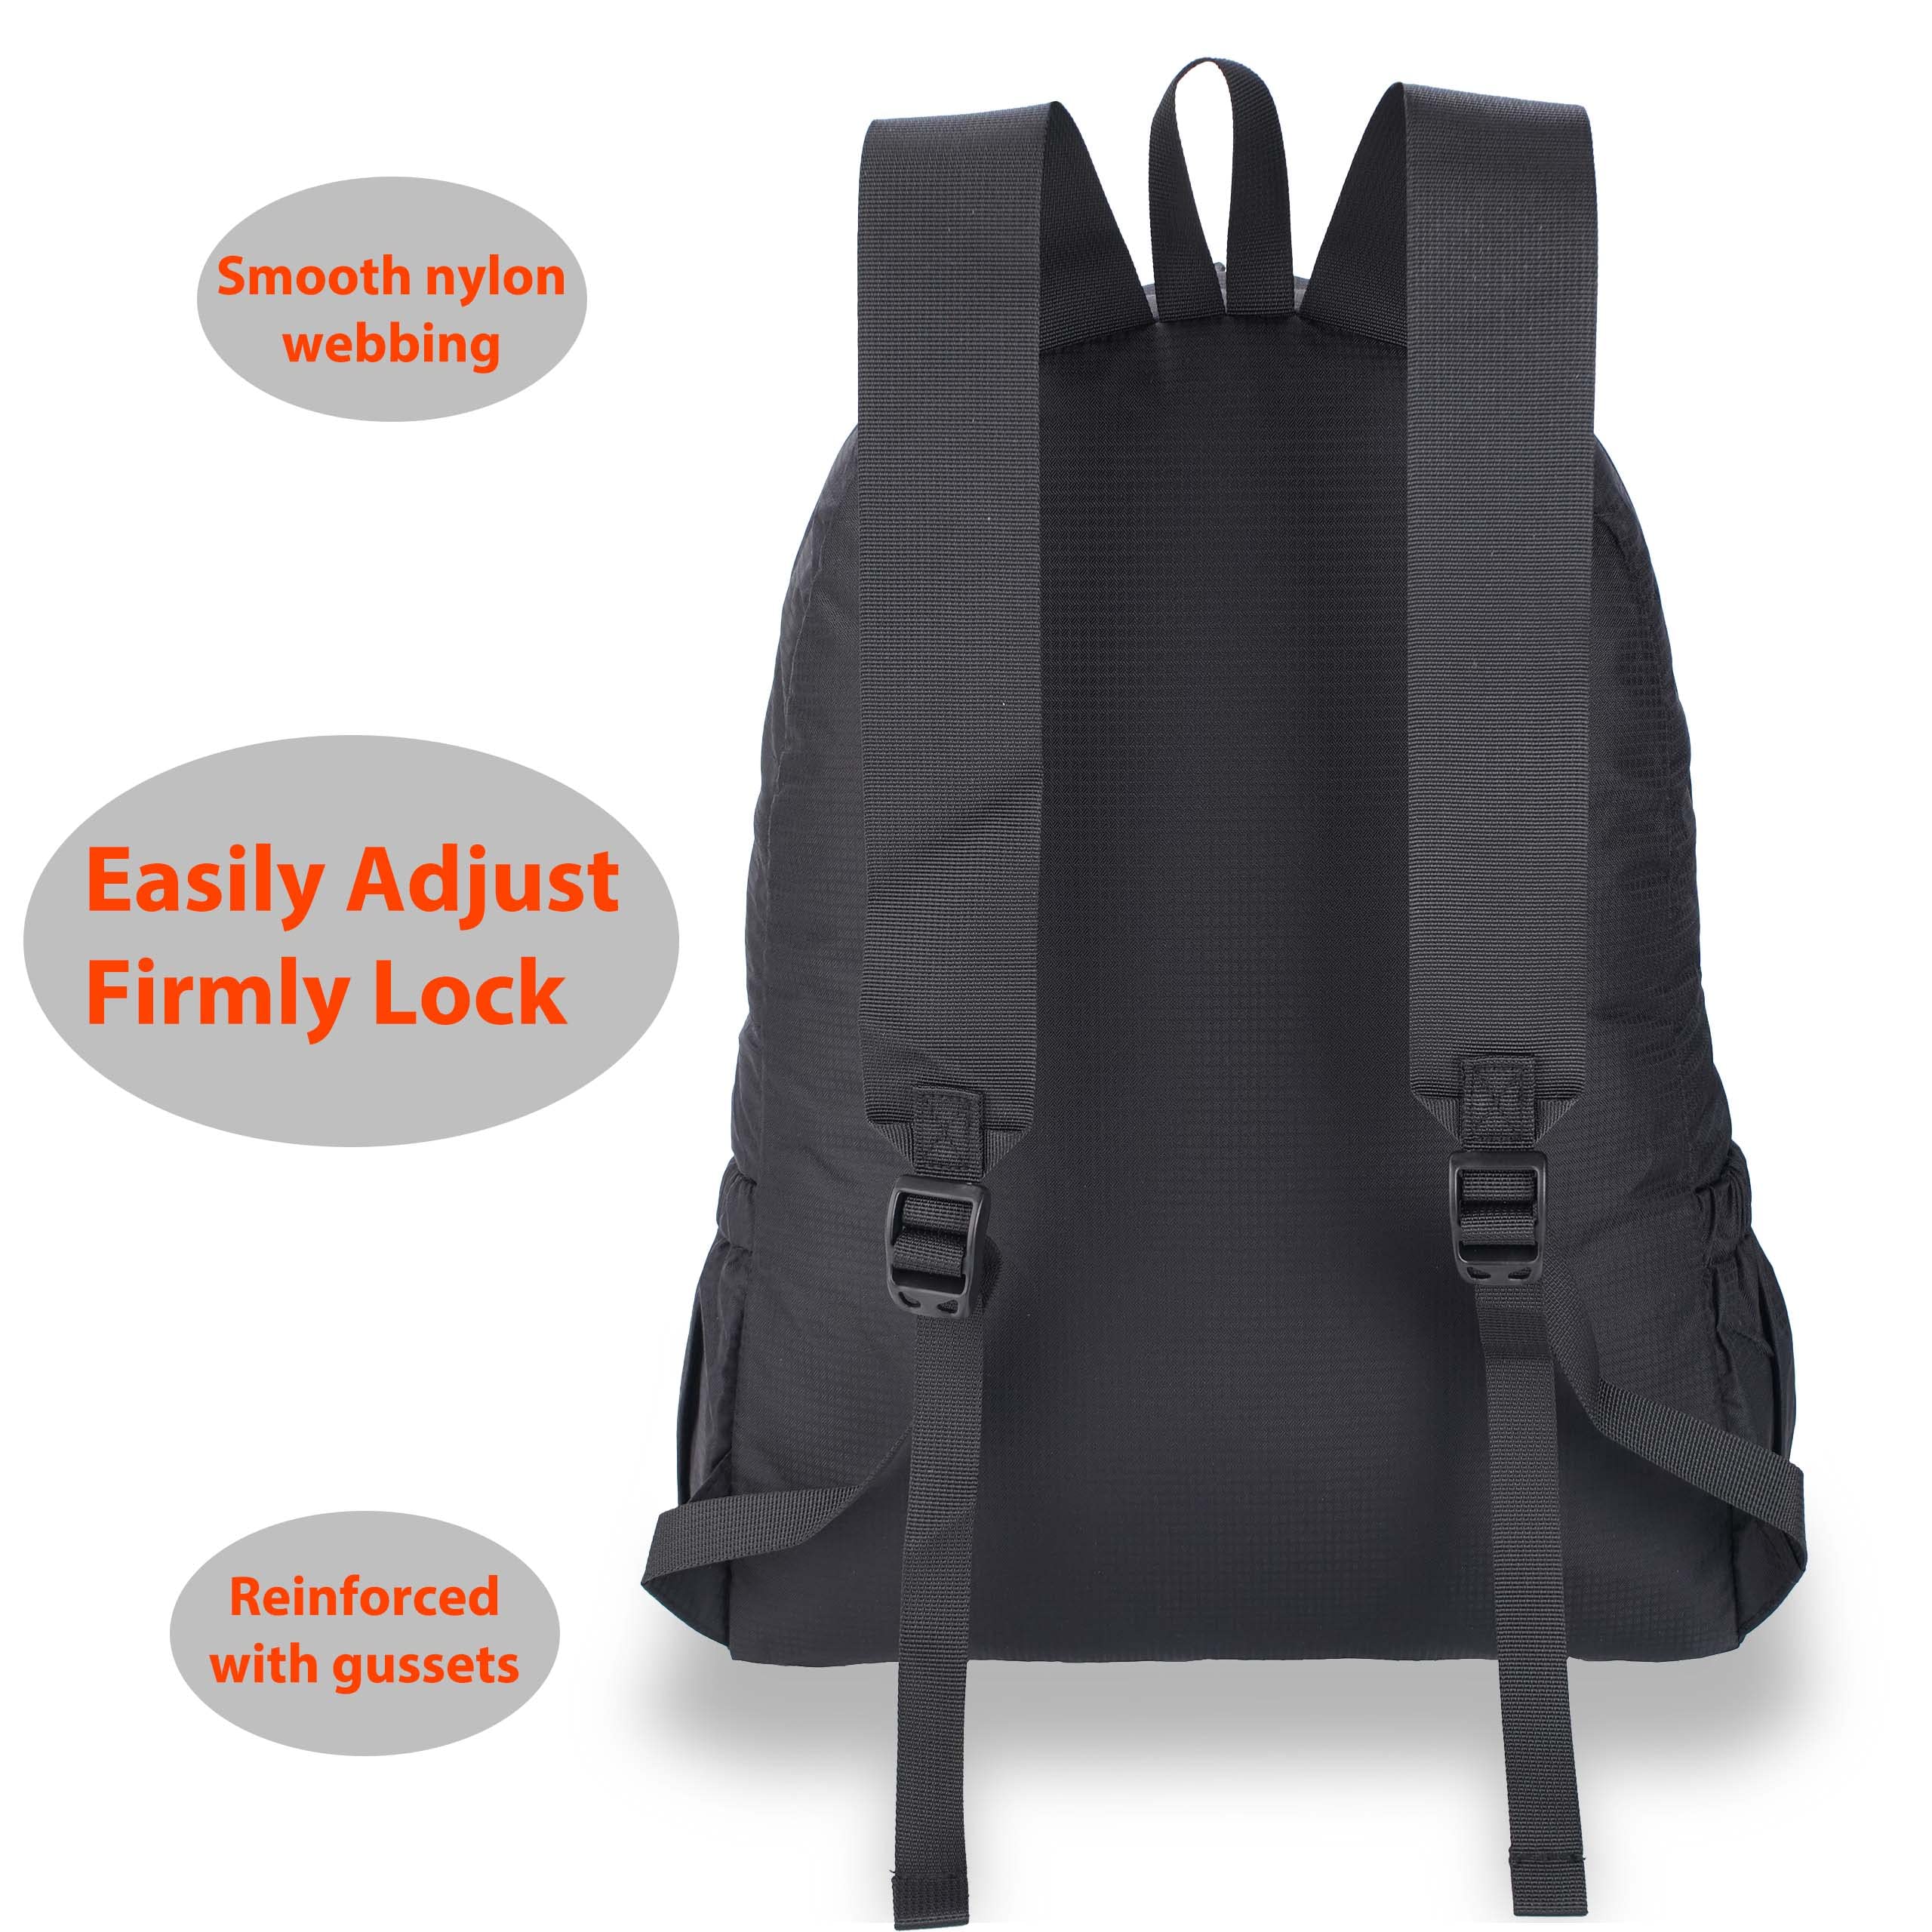 BRONCO MIHK Lightweight Packable Backpack 20L Hiking Daypack Nylon Backpacks for Women (Black)